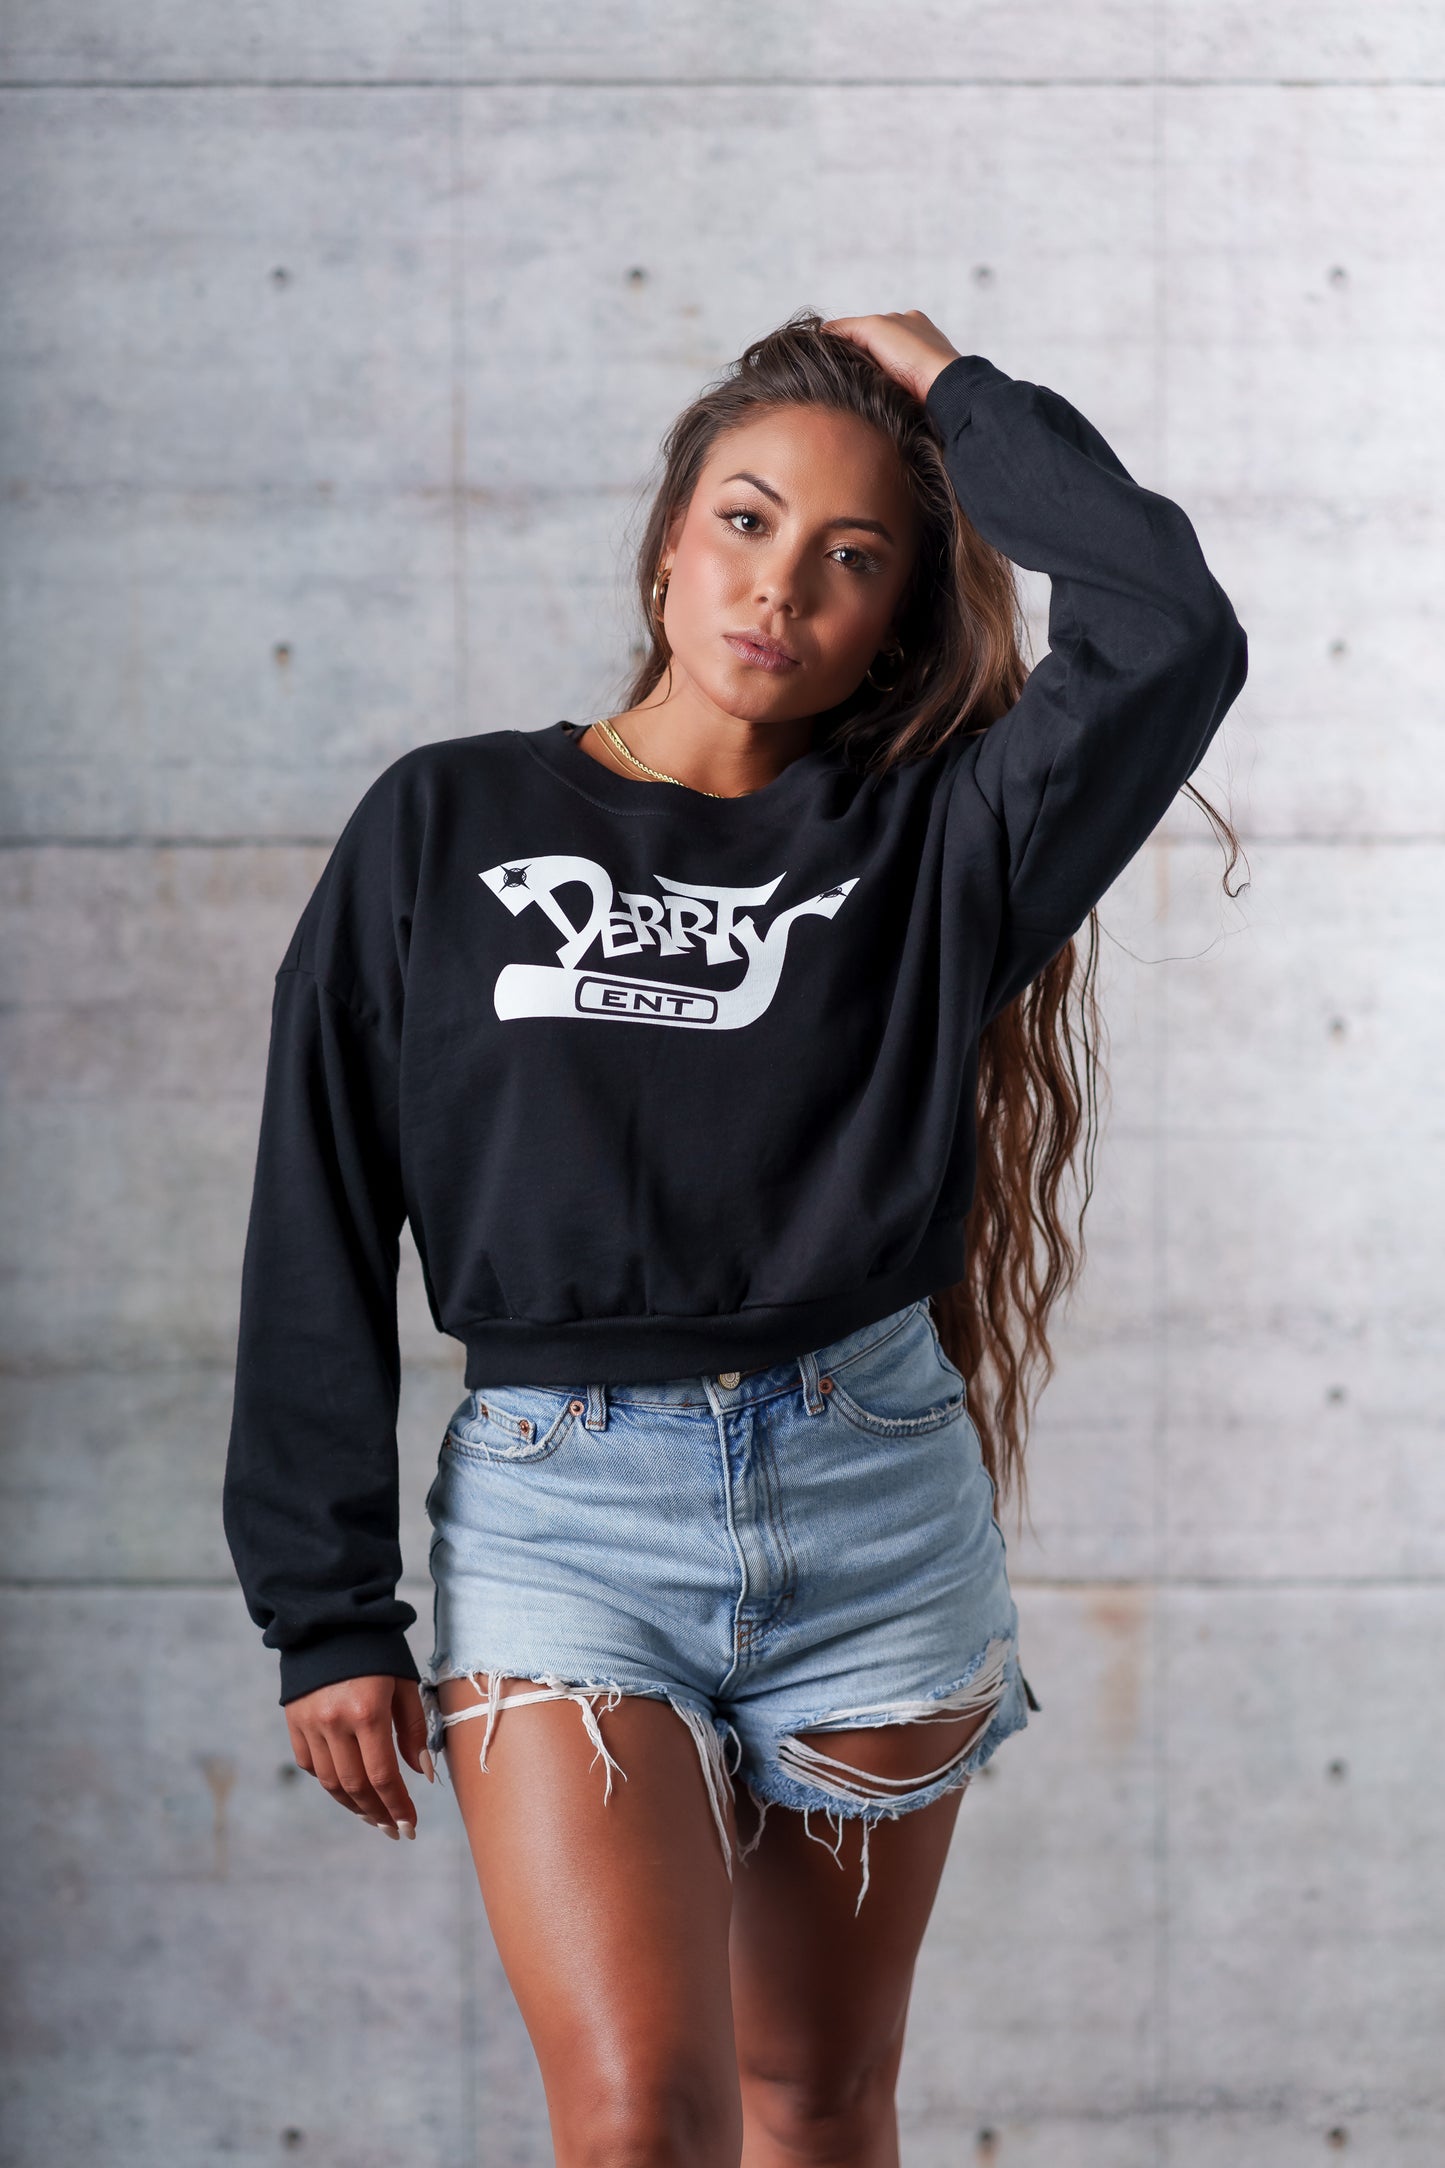 Buy Beige Sweatshirt & Hoodies for Women by Outryt Online